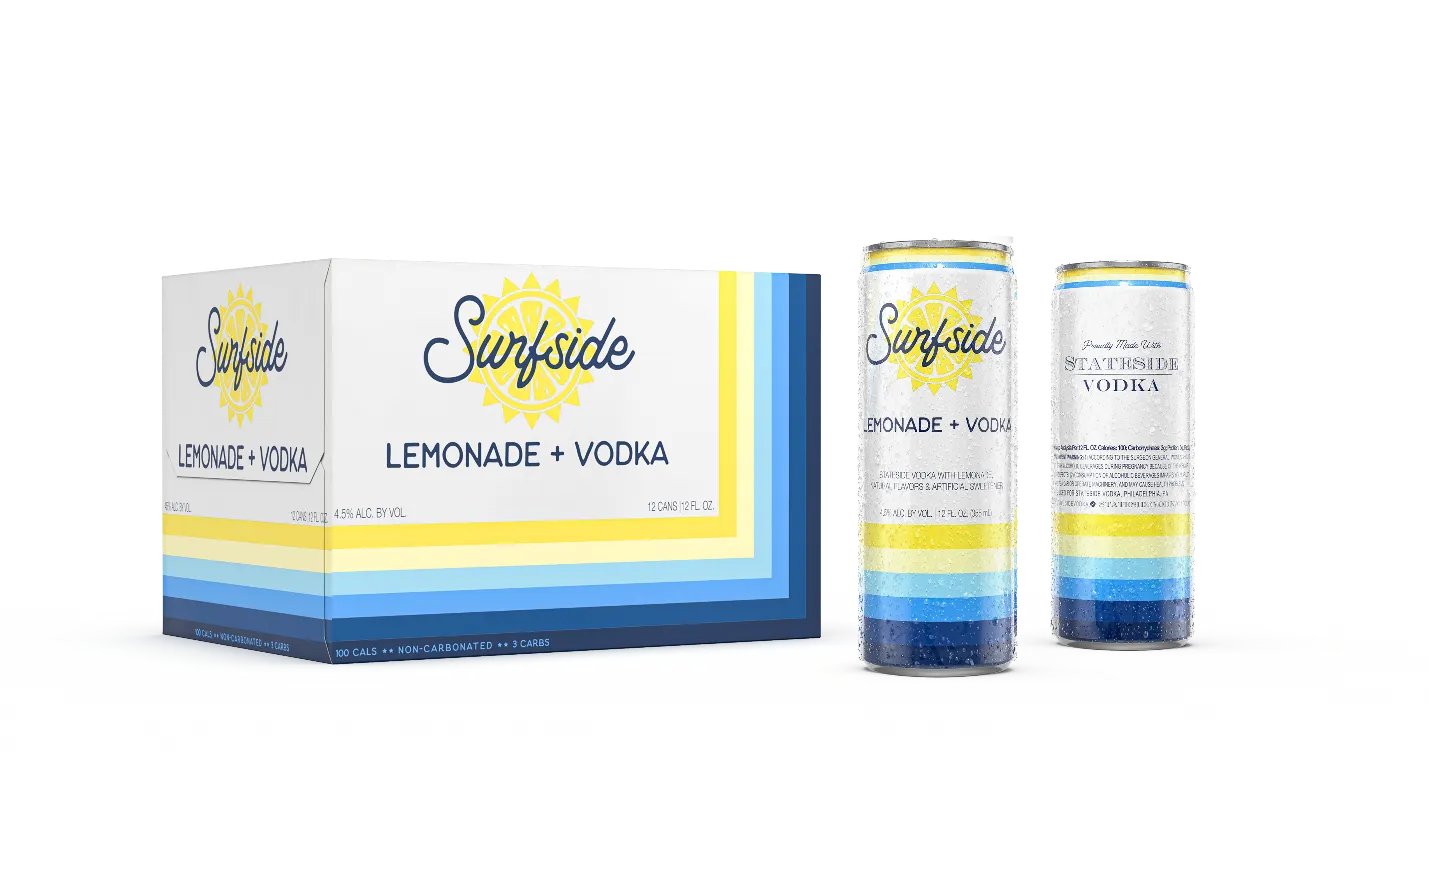 Lemonade + Vodka Variety Pack